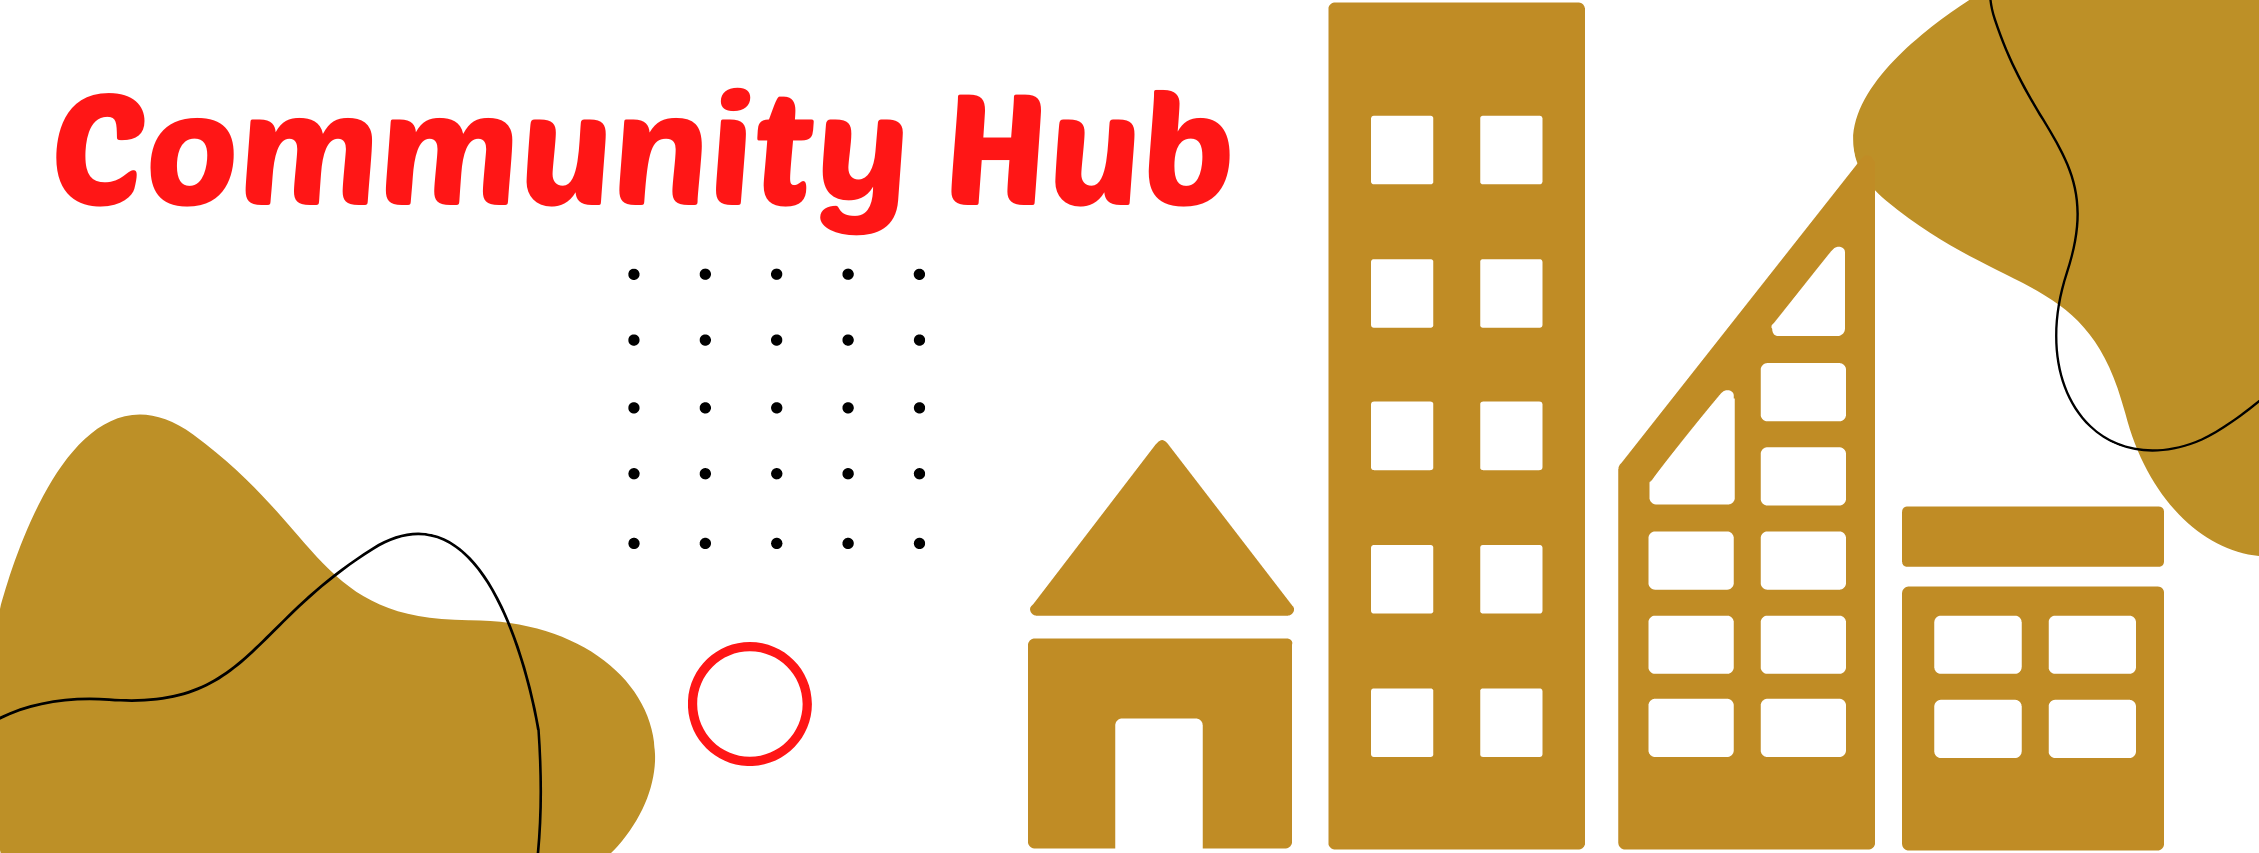 Community Hub Banner